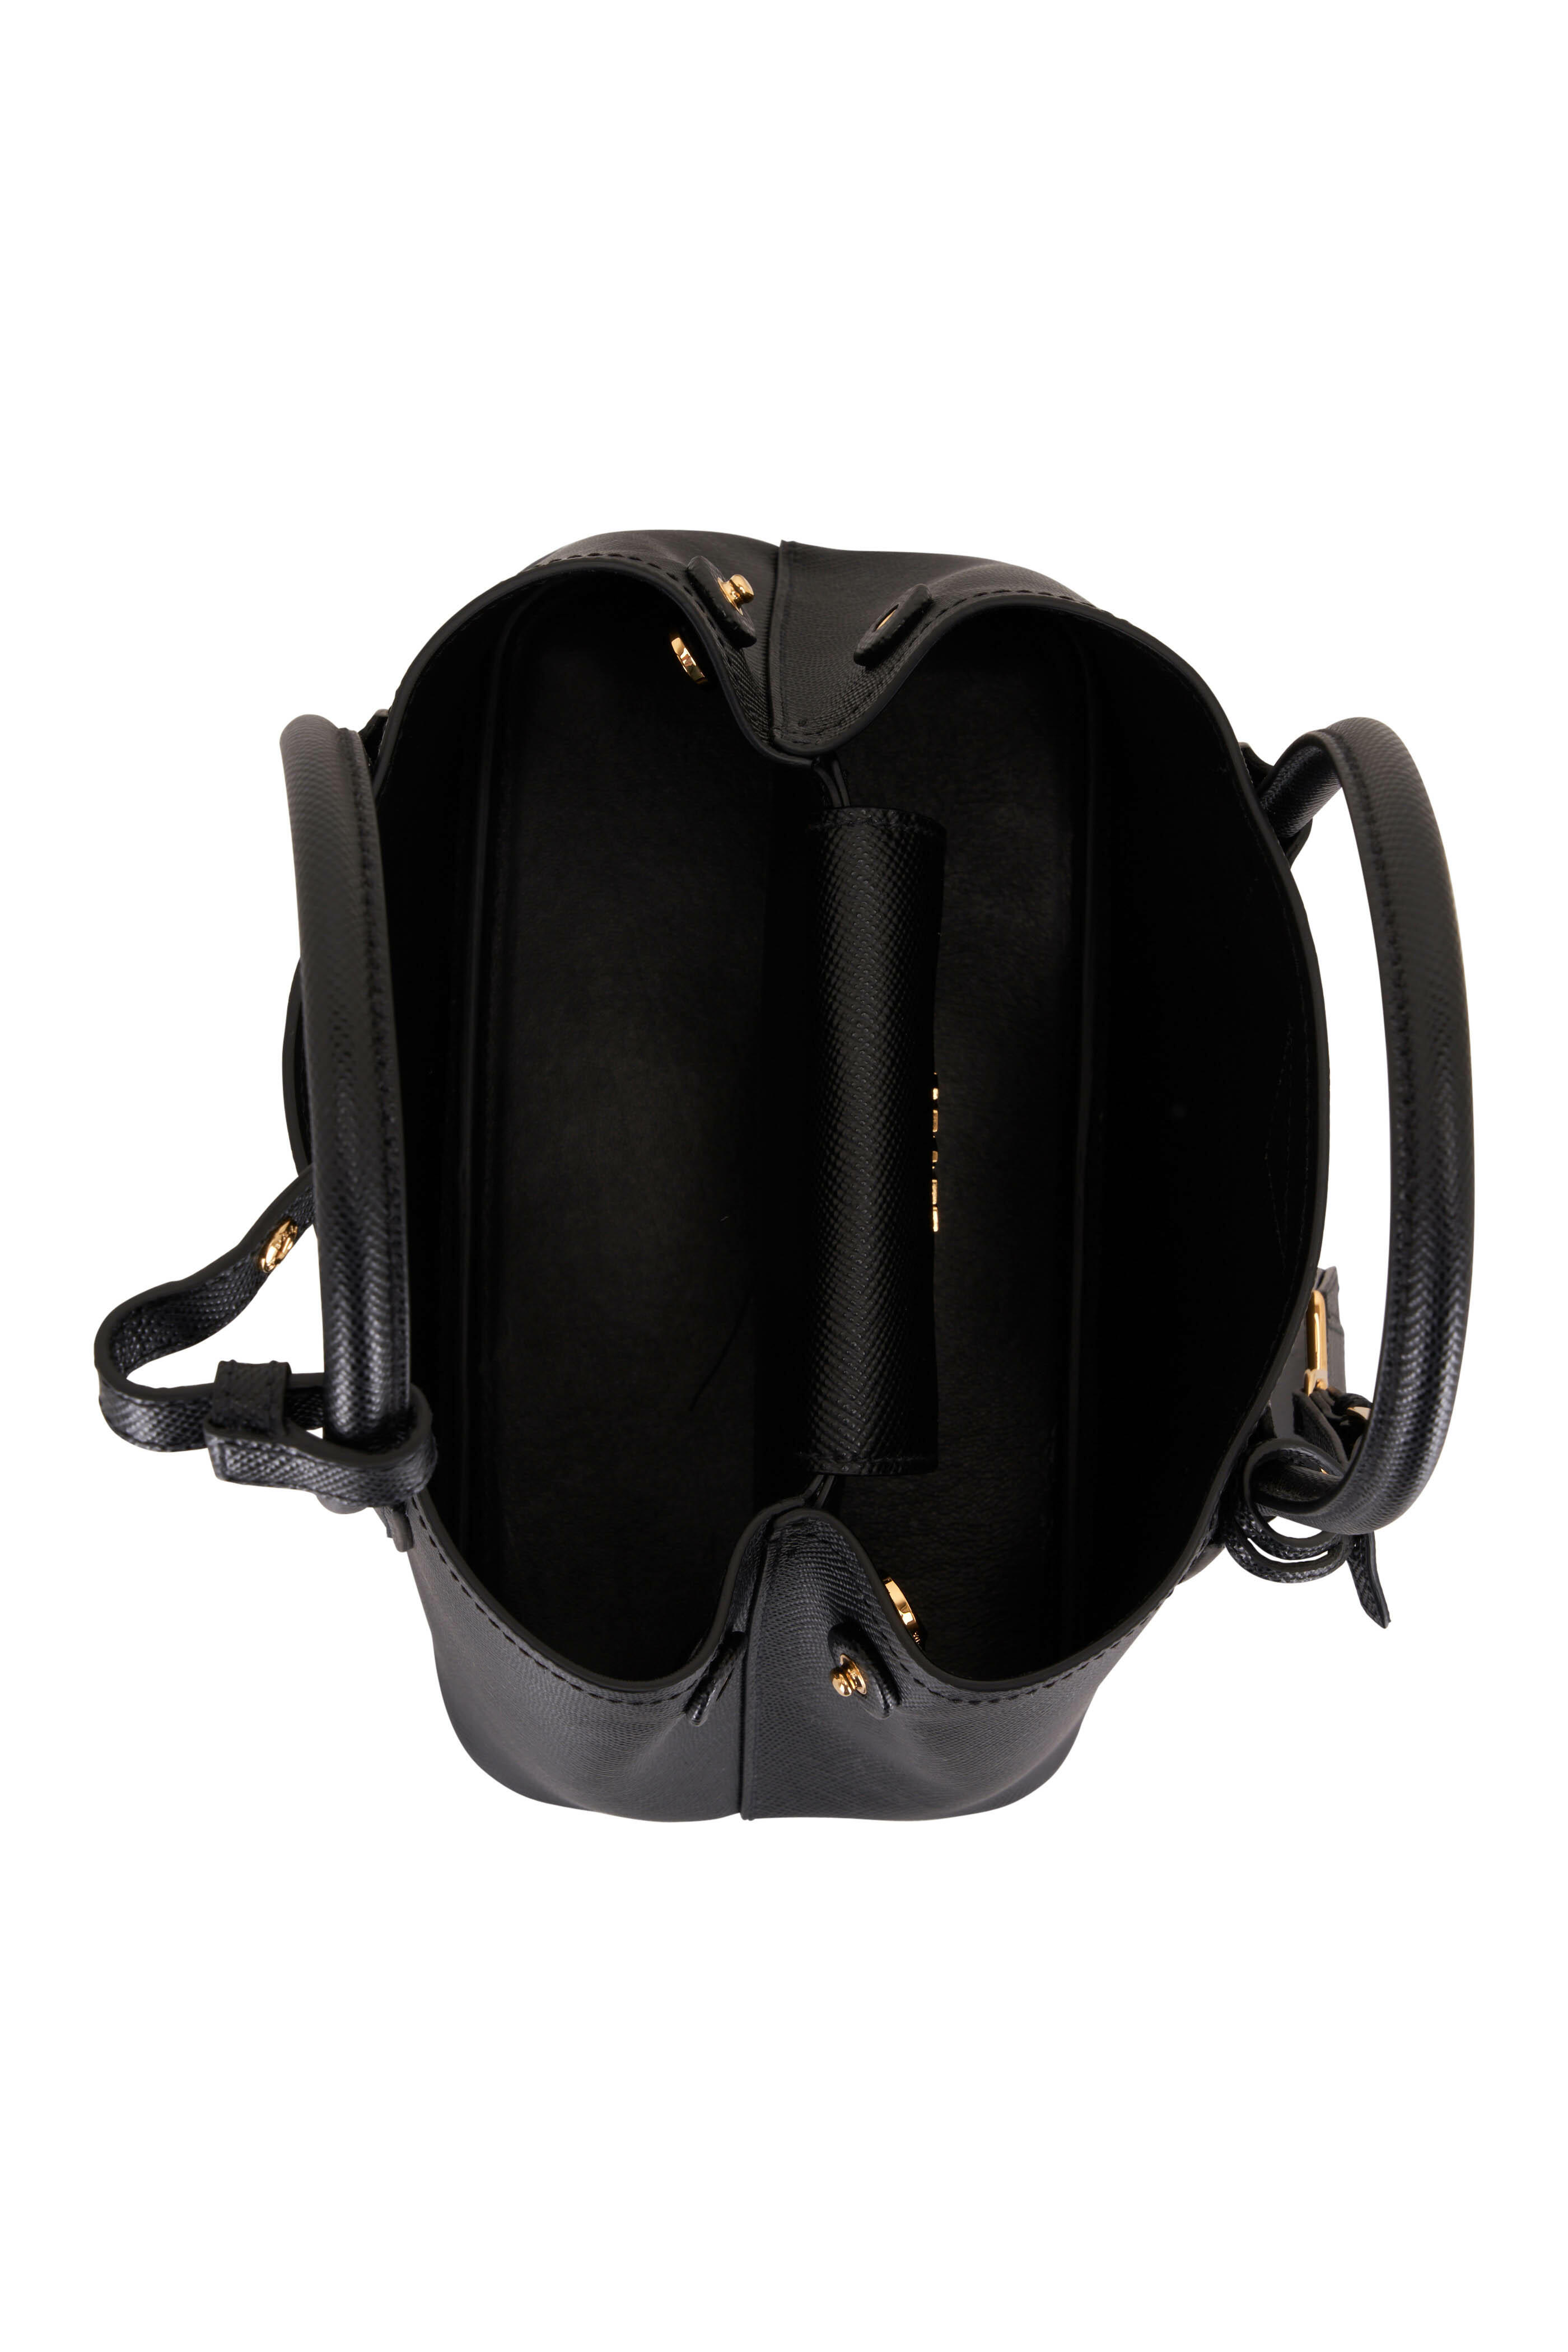 REVIEW] Prada Small Saffiano Leather Double Prada Bag - BF : r/WagoonLadies